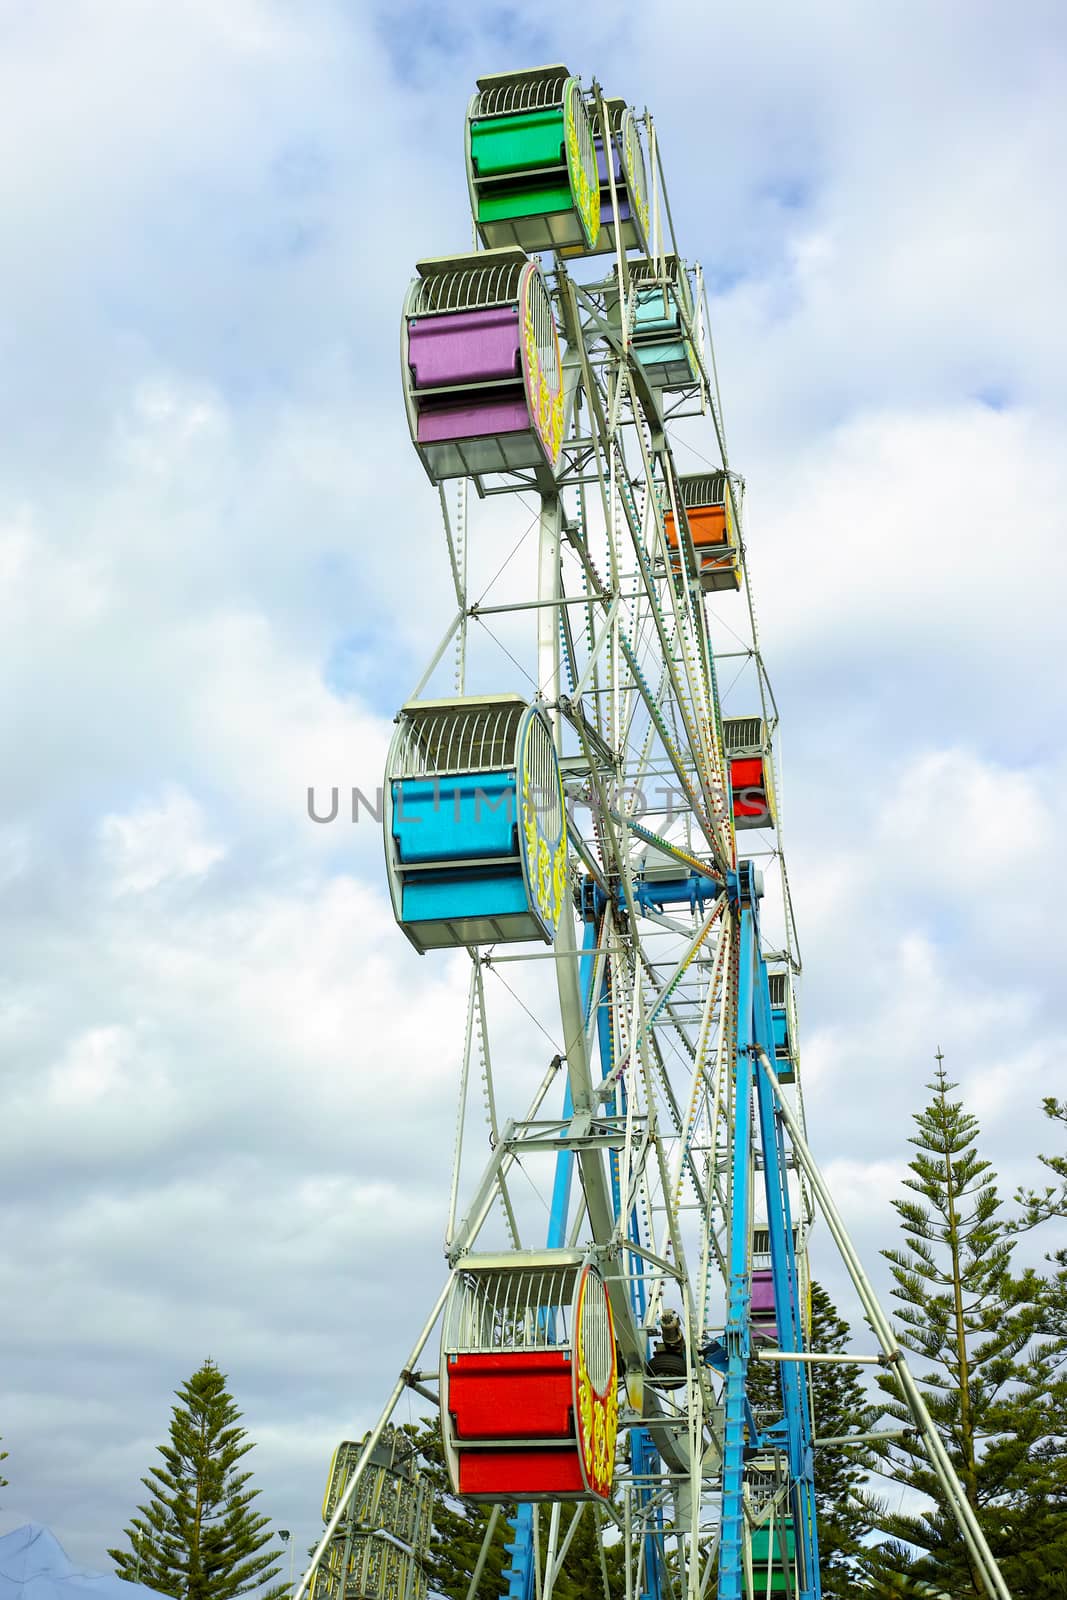 Looking up at a ferris wheel in amusement park by jaaske